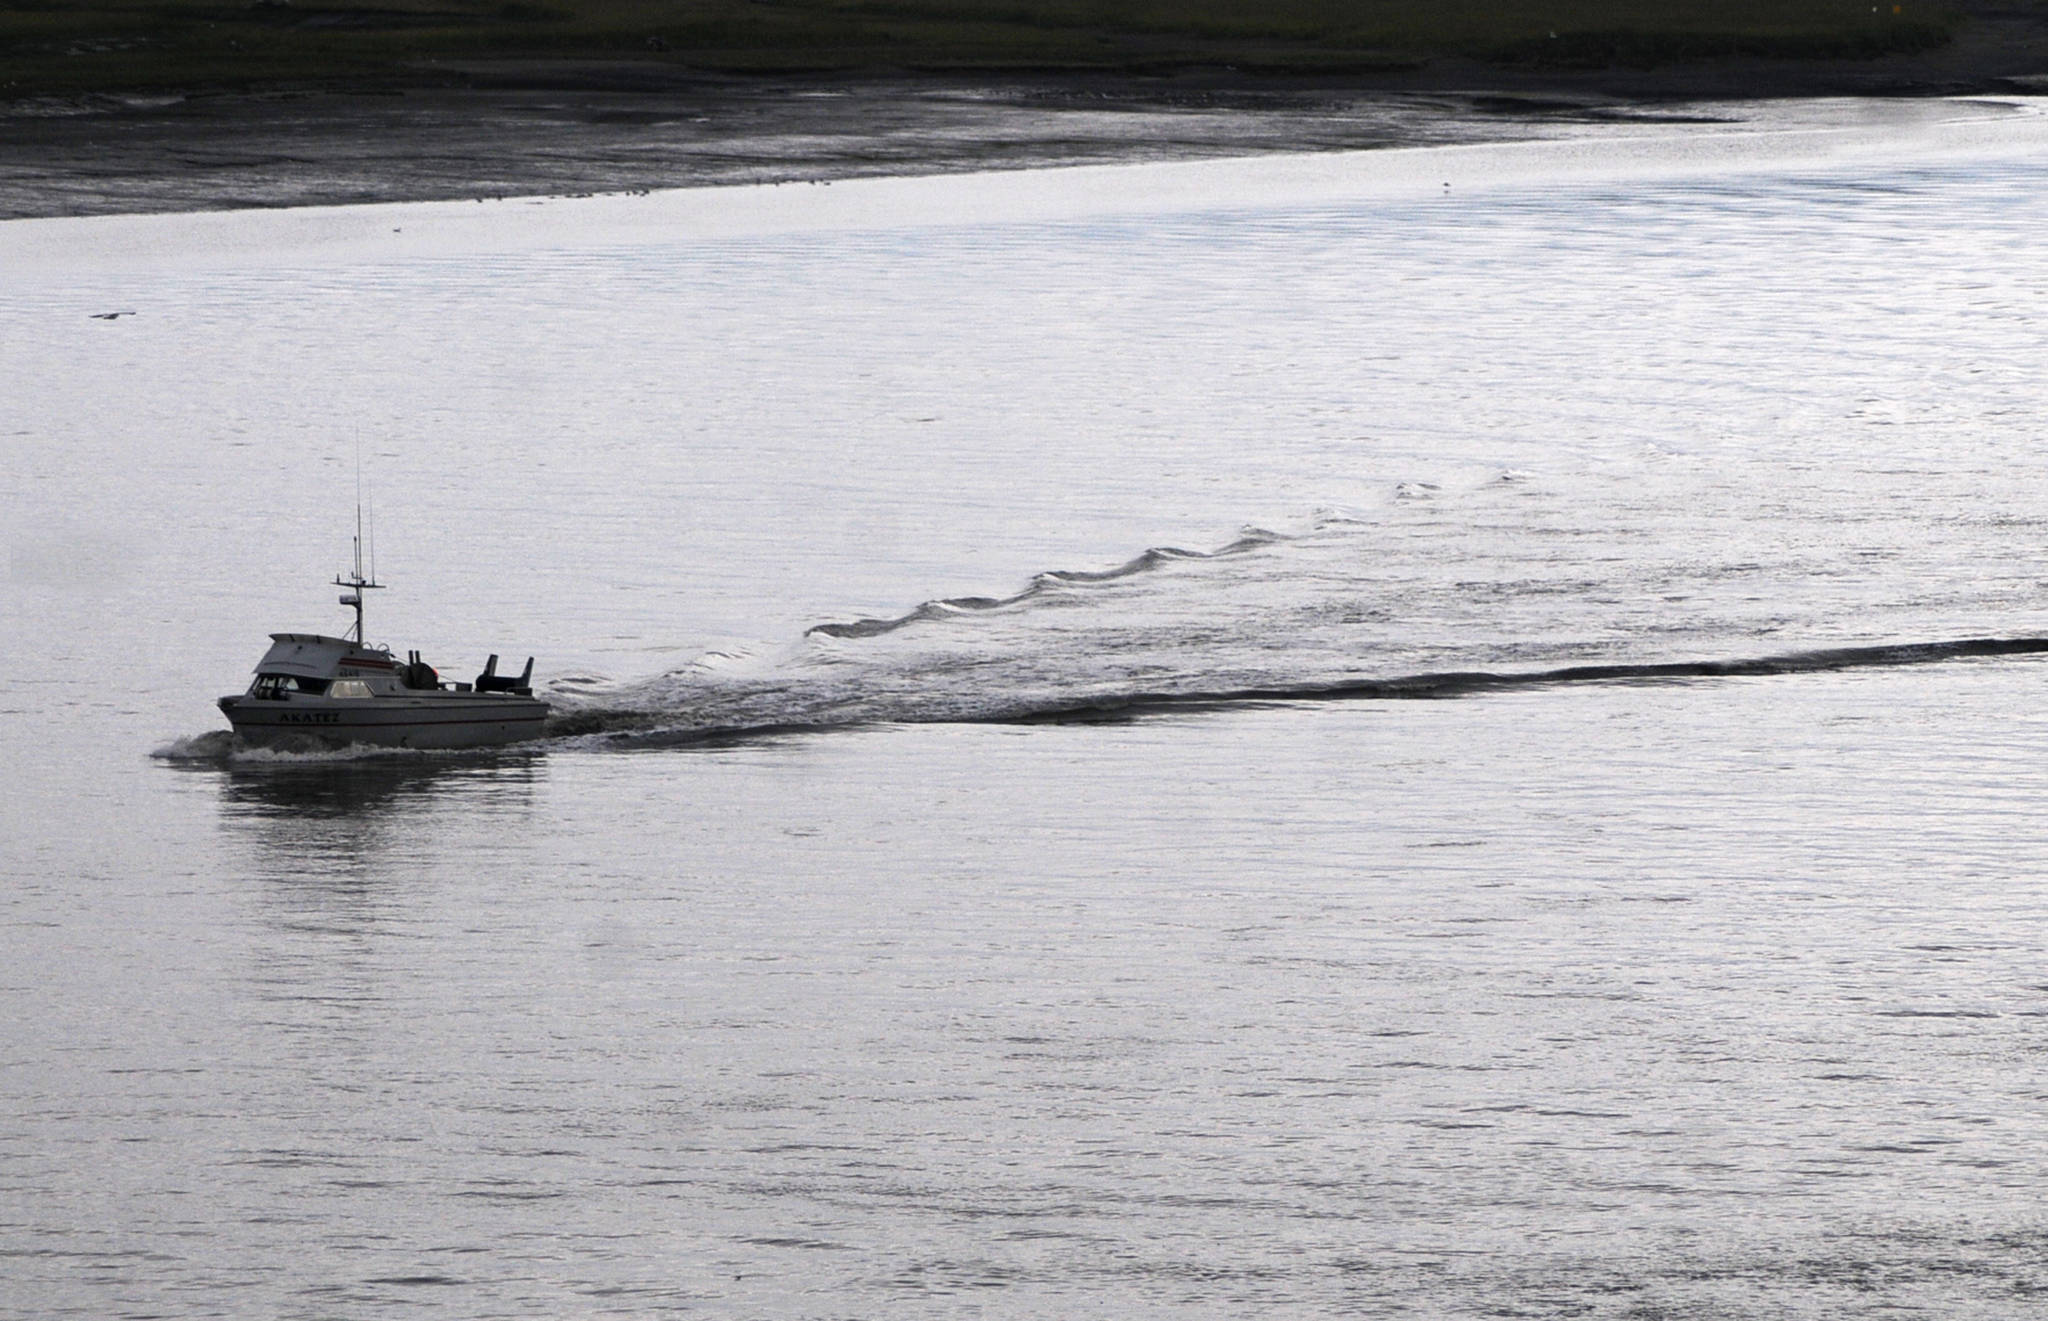 A drift gillnet fishing vessel makes its way into the Kenai River on Friday, July 28, 2017 in Kenai, Alaska. (Photo by Elizabeth Earl/Peninsula Clarion, file)